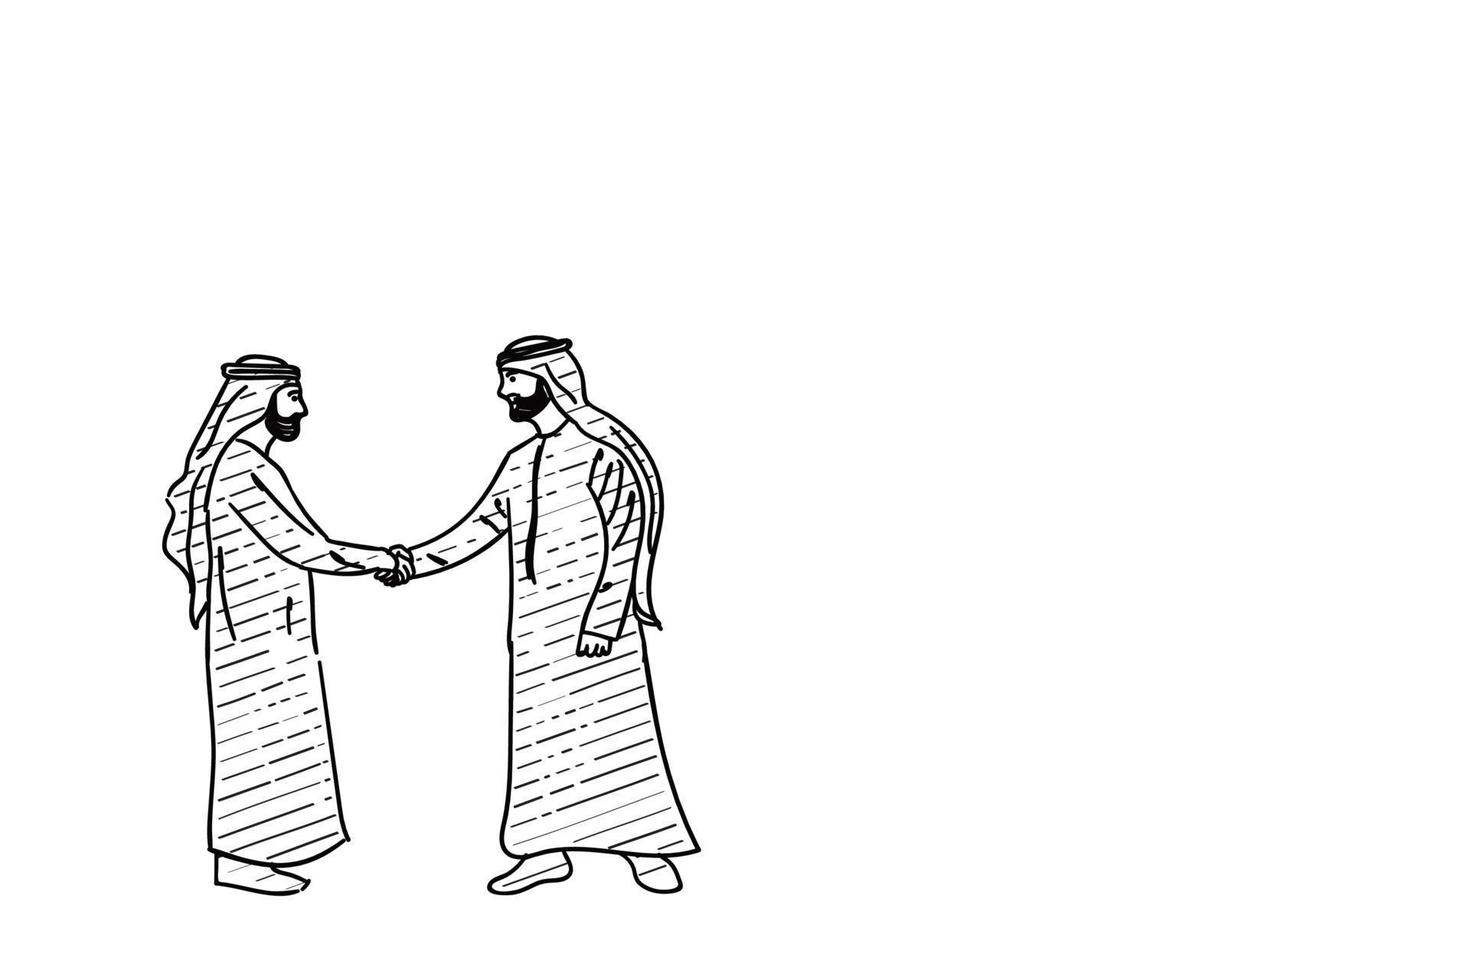 Handshake between arabic men. Hand drawn vector illustration design